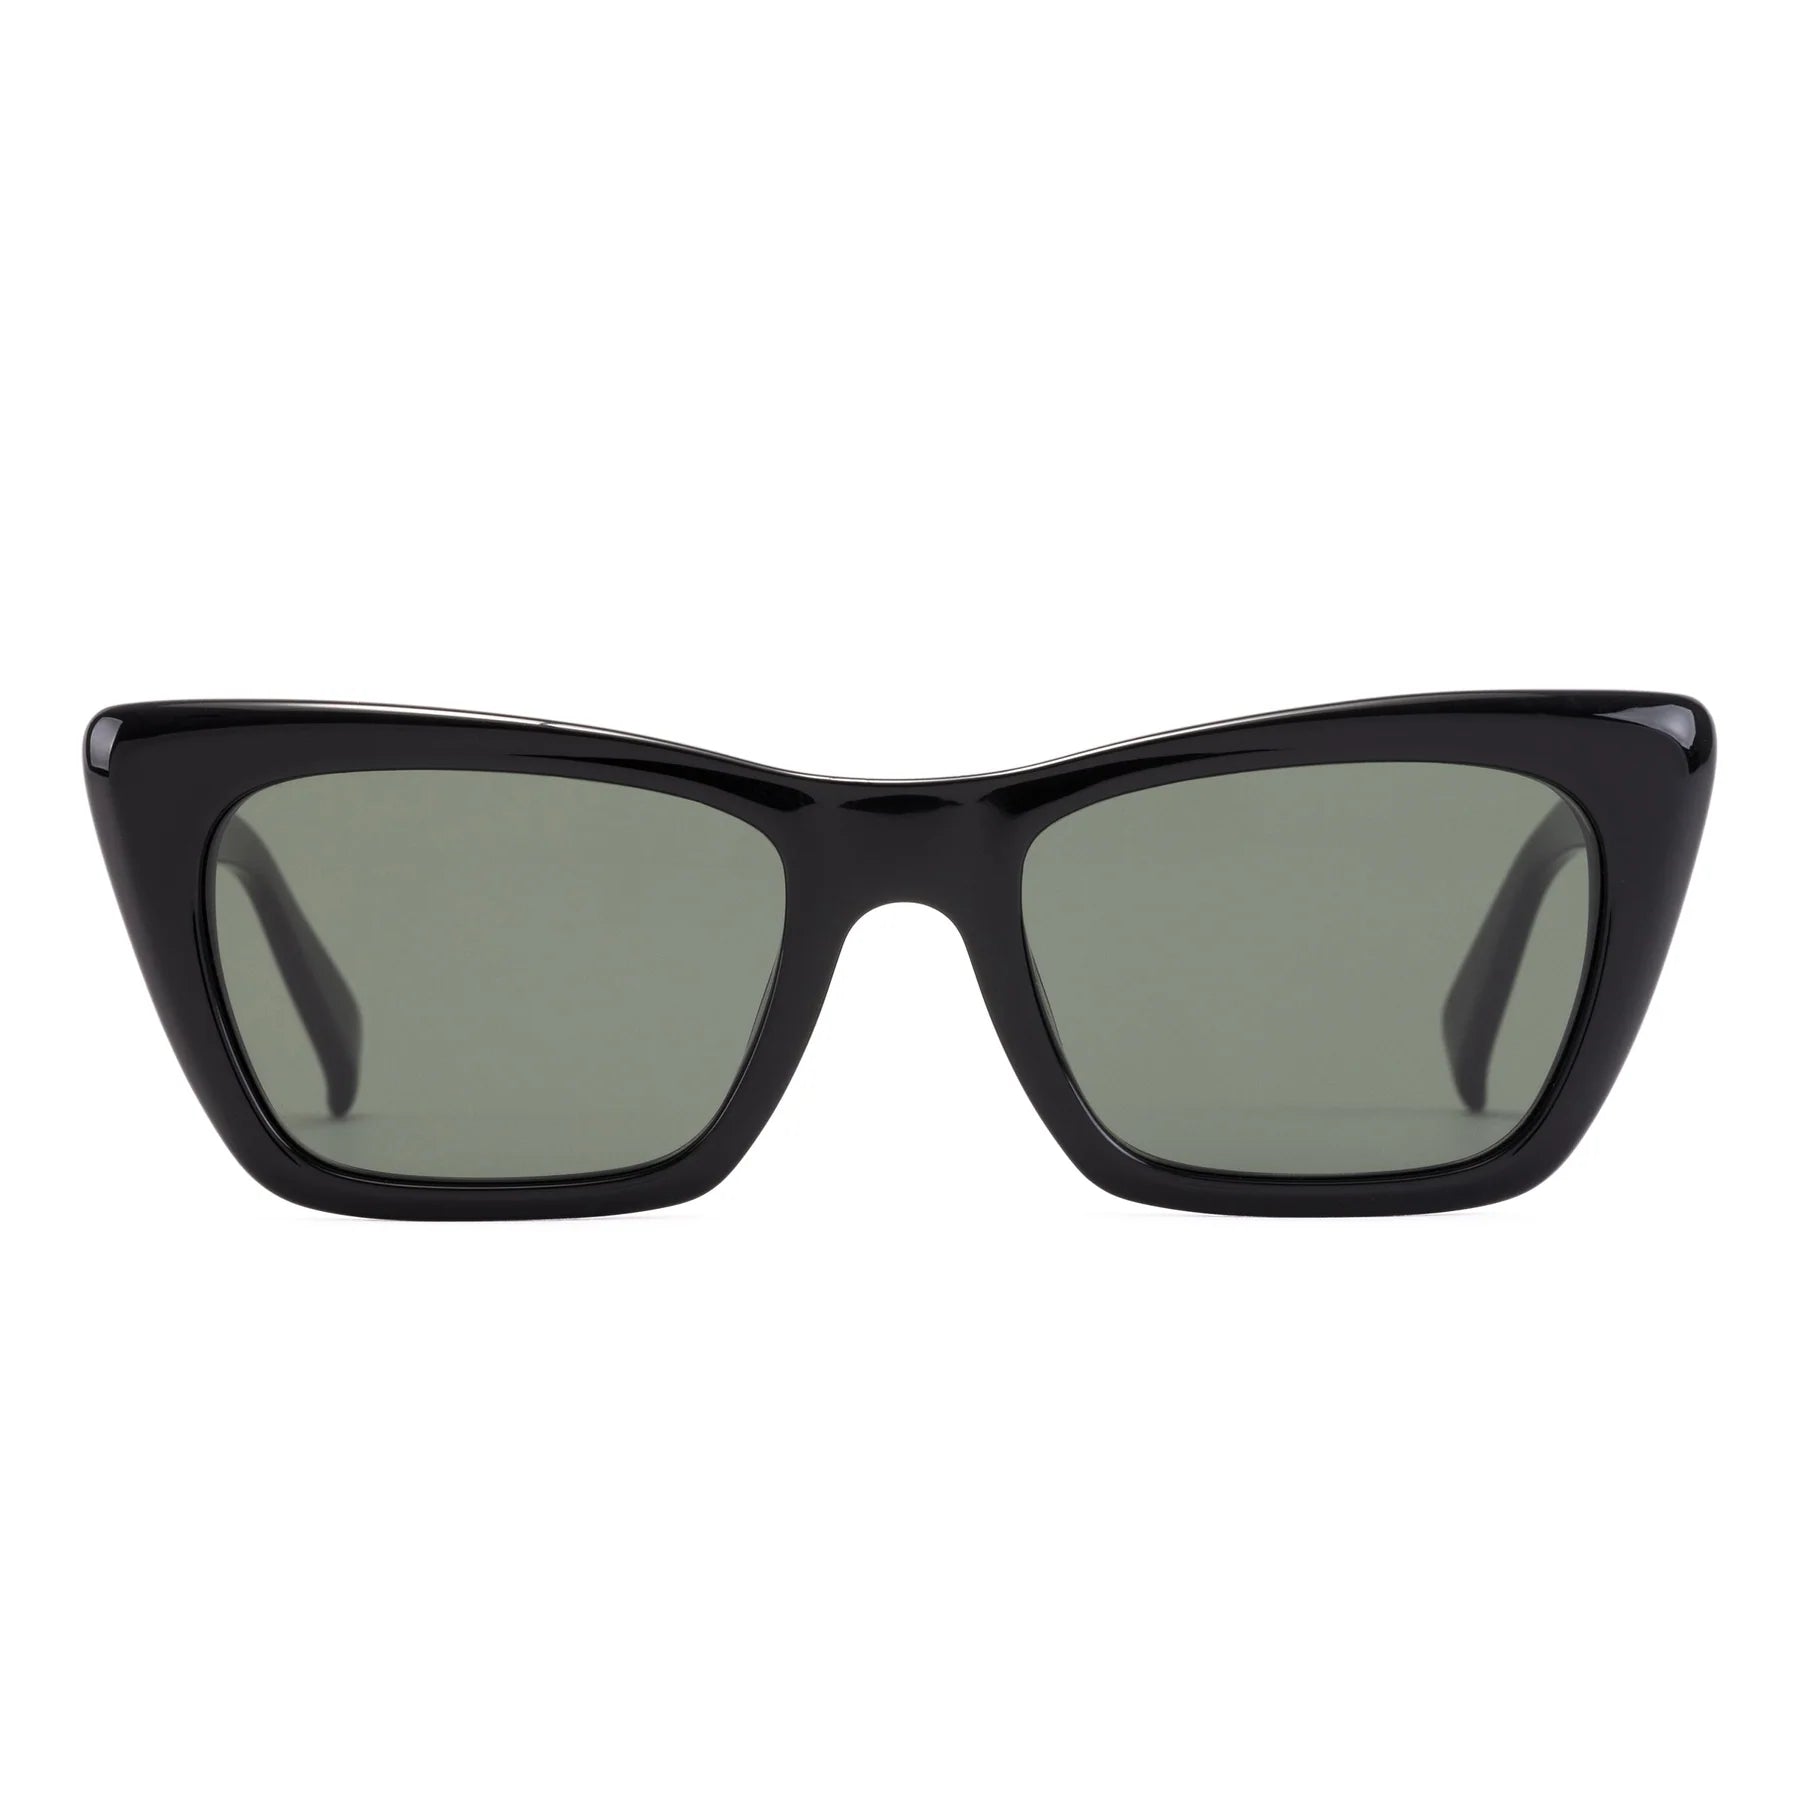 CURRENTS ECO BLACK/GREY - Board Store Otis EyewearSunglasses  